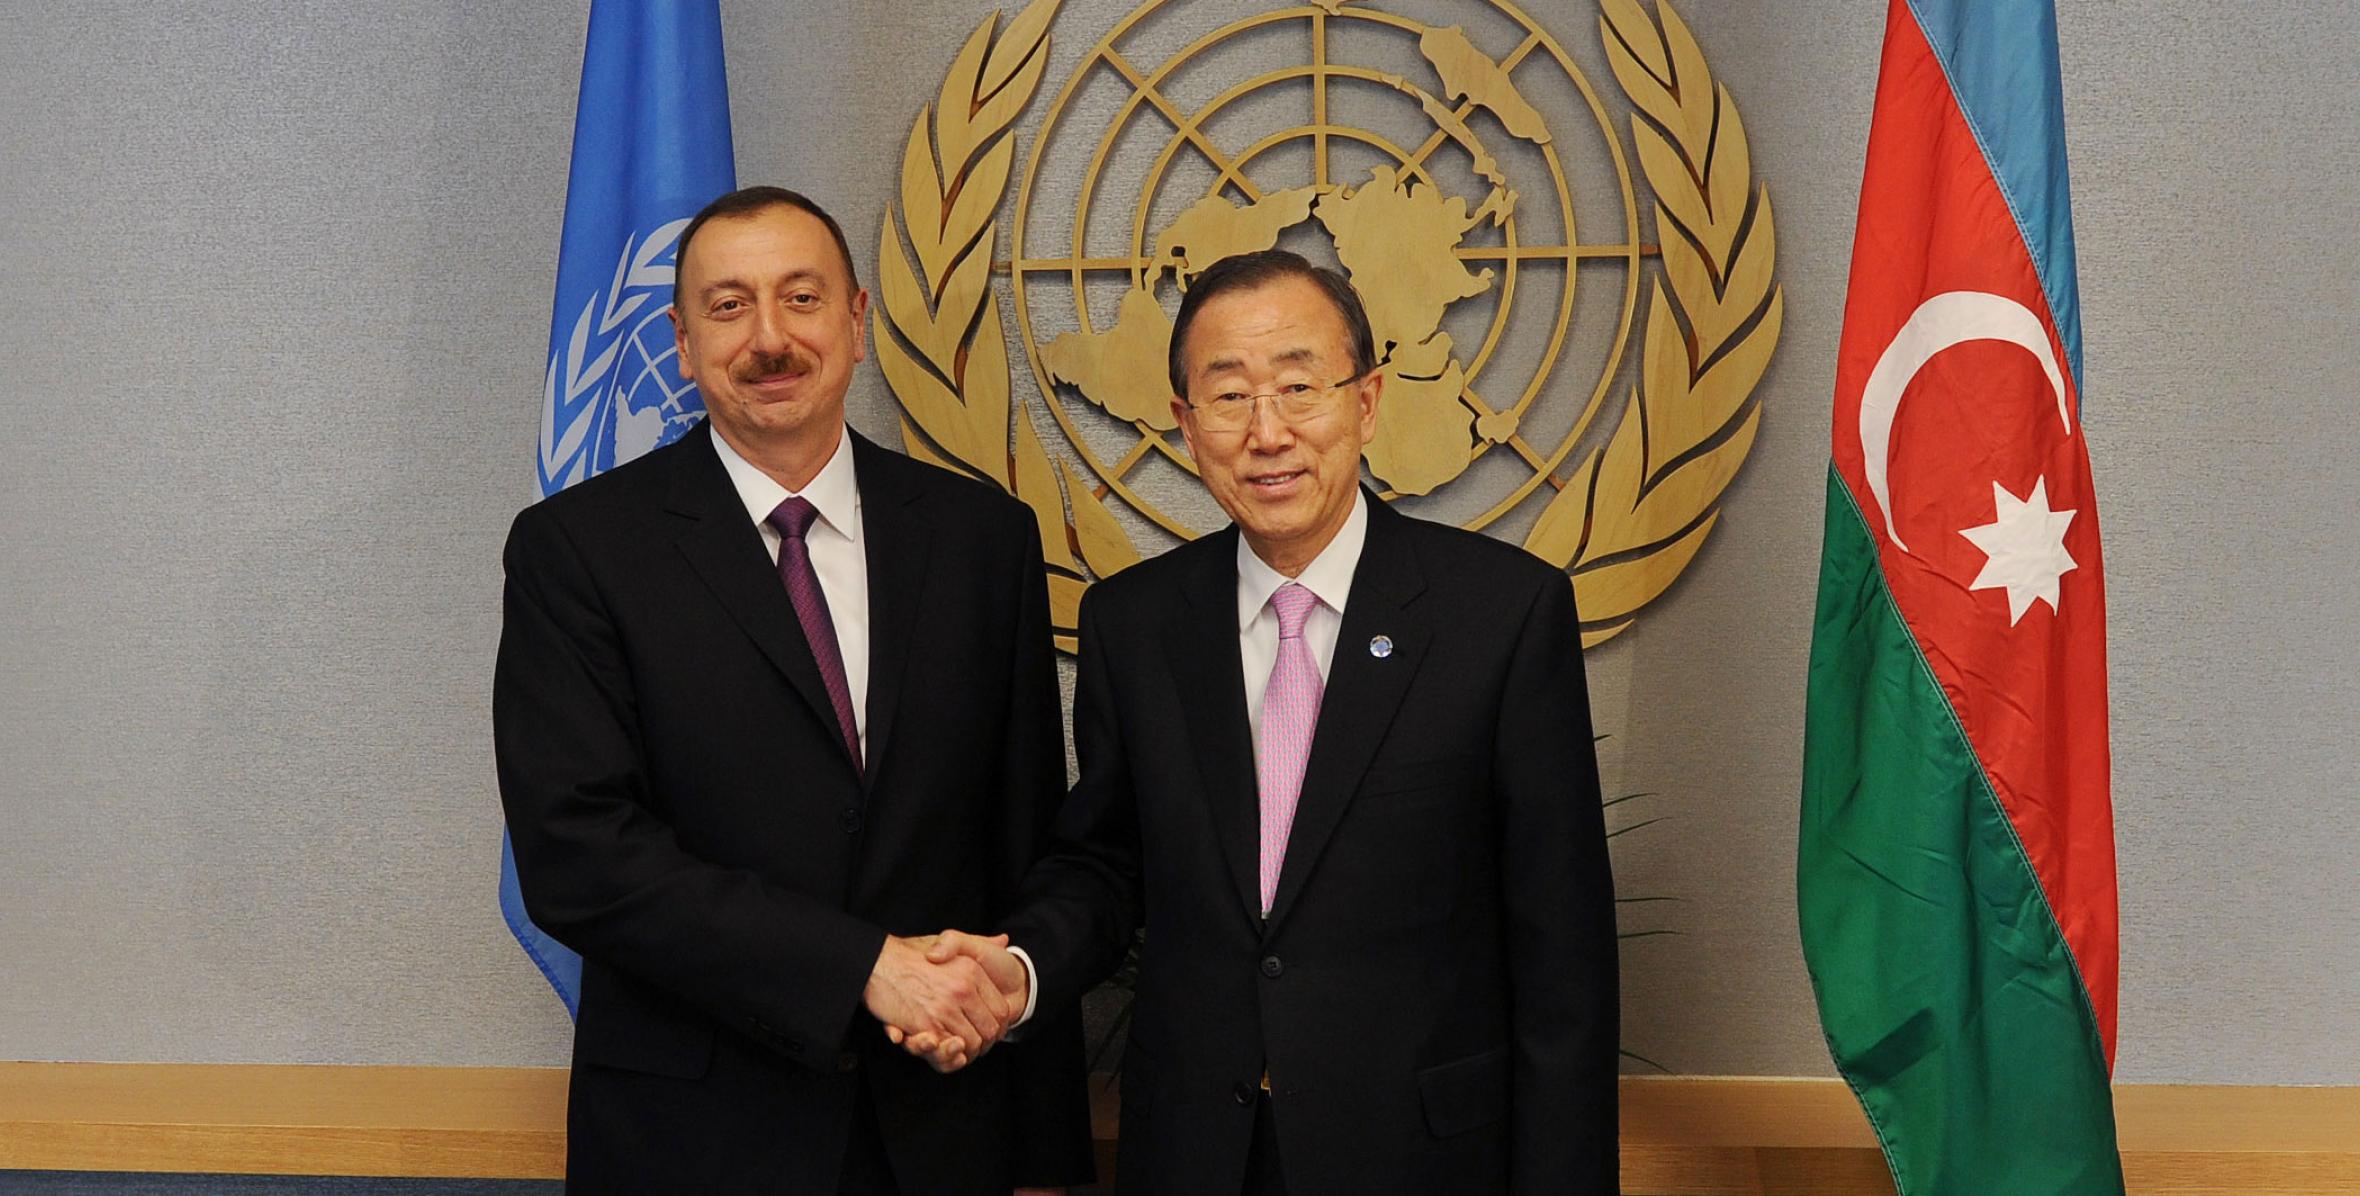 Ilham Aliyevmet with UN Secretary General Ban Ki-moon in New York